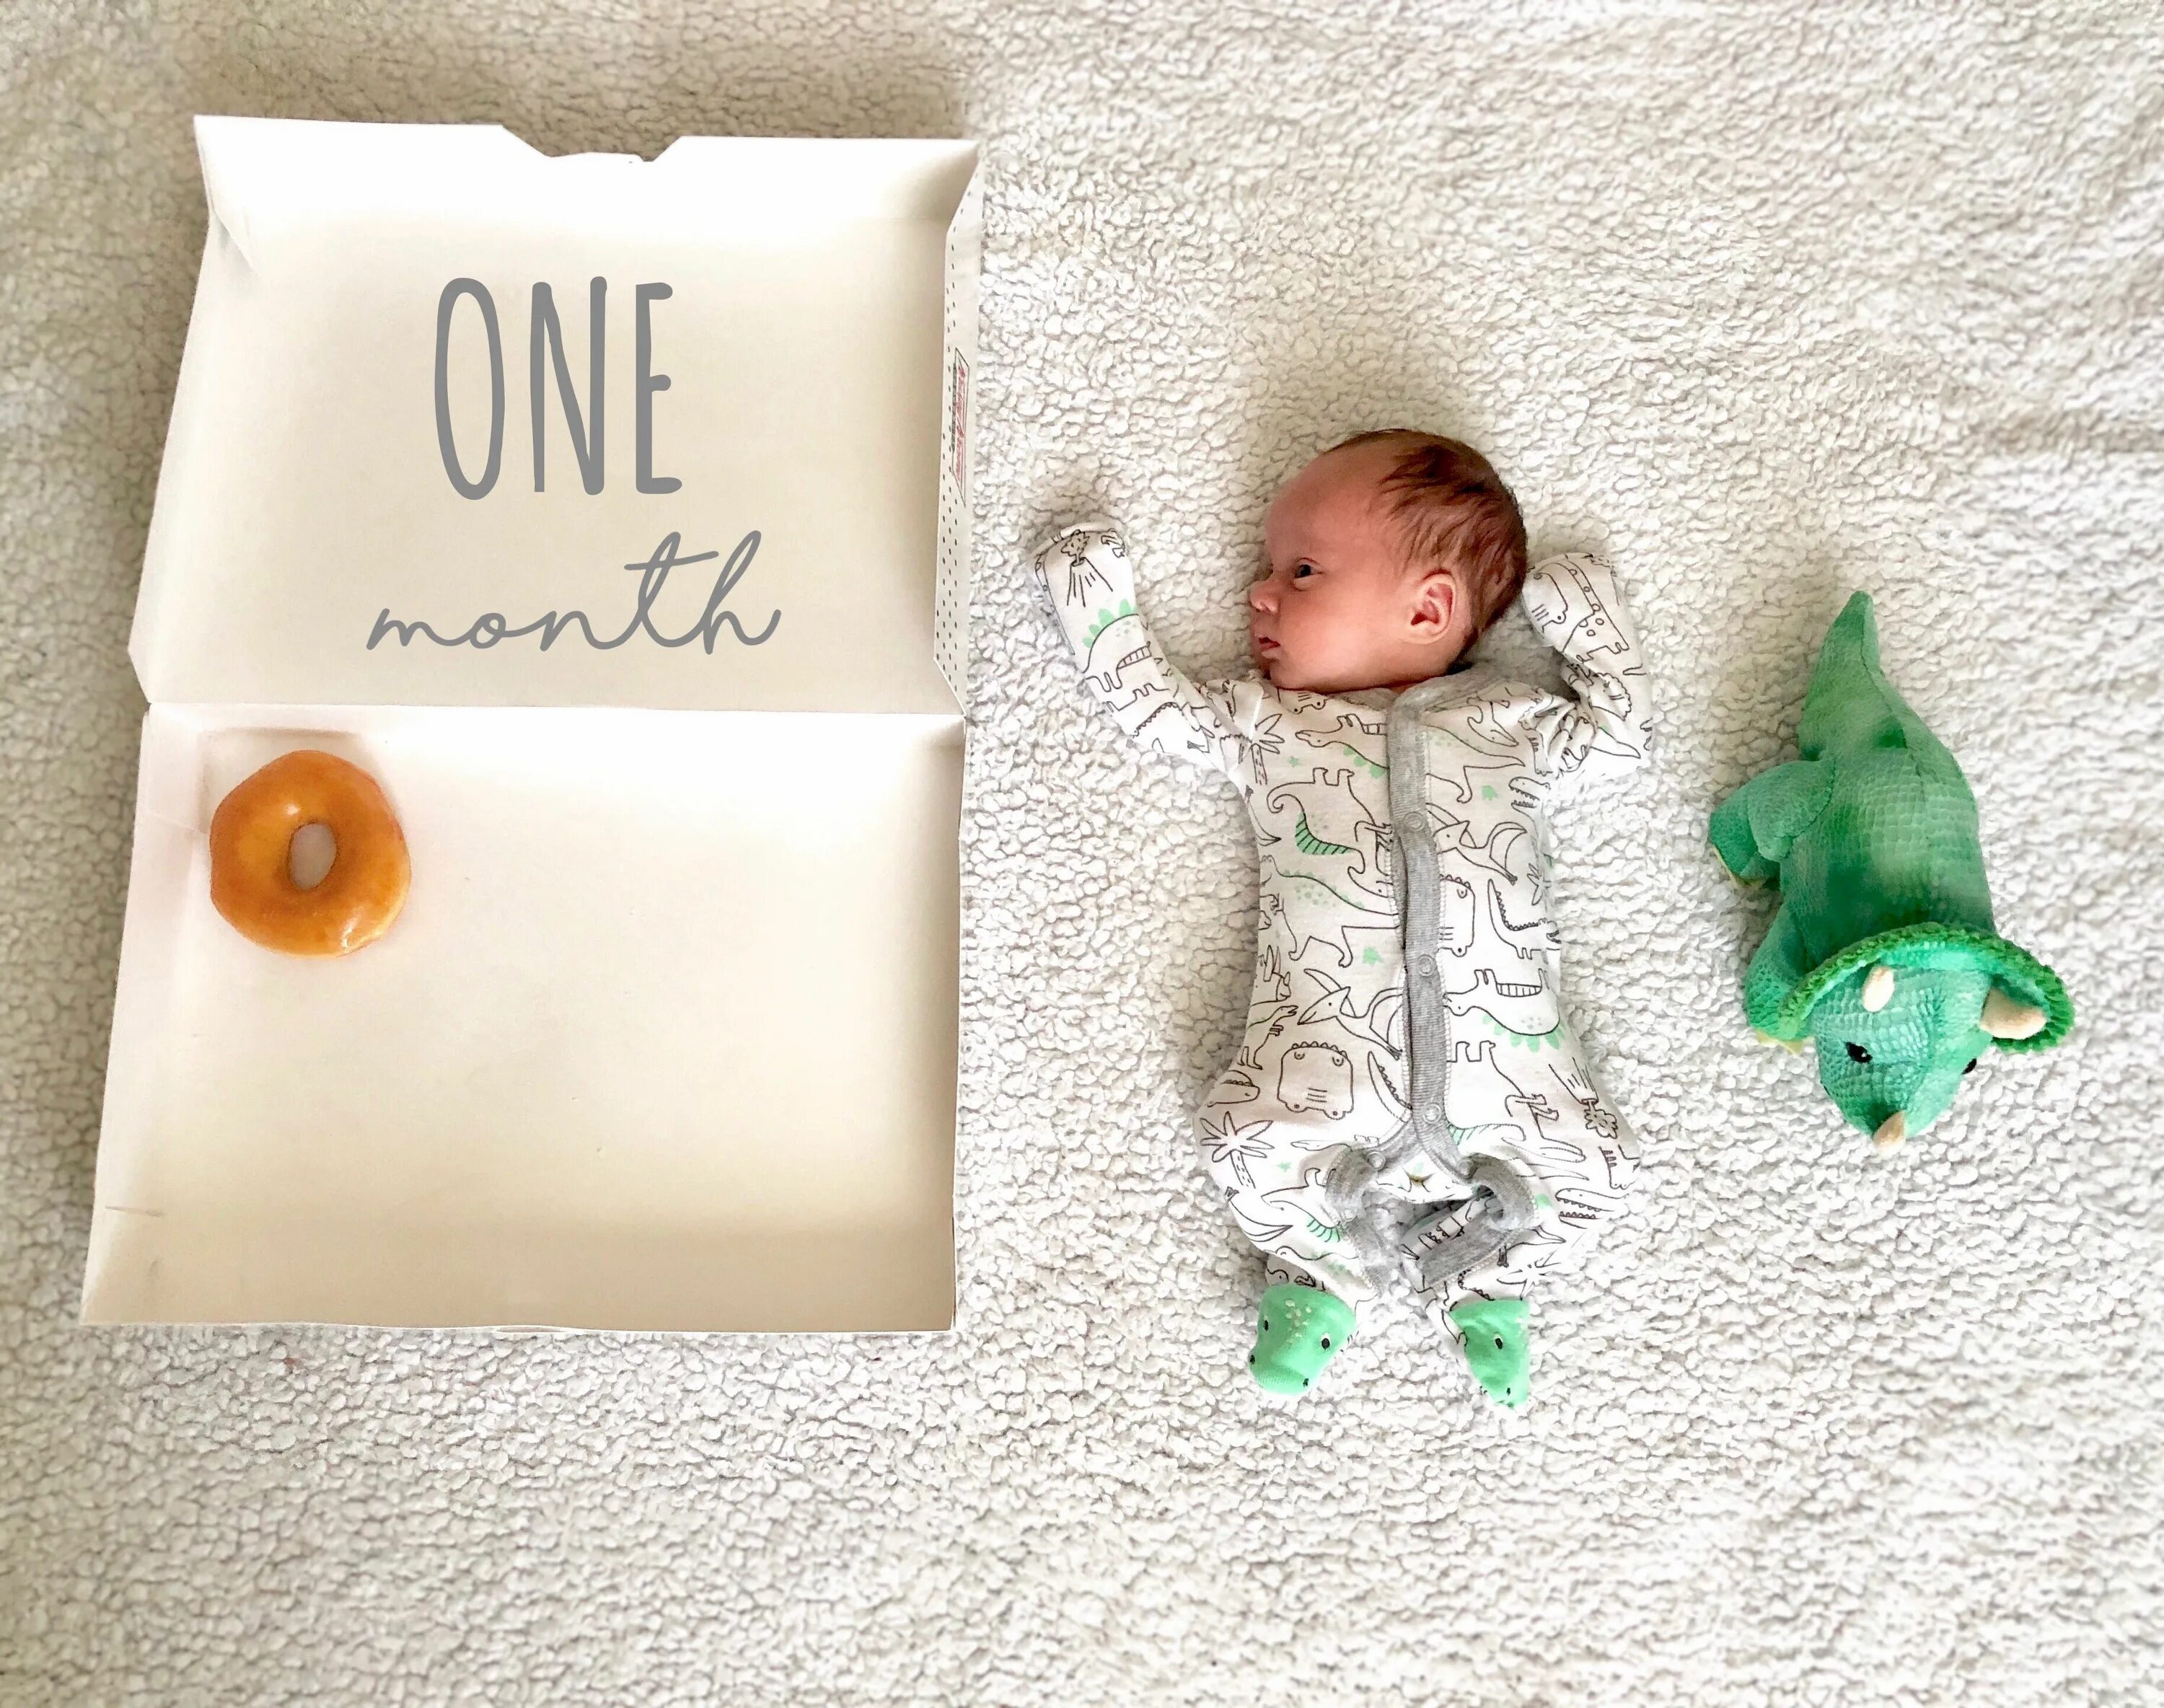 Месяц жизни новорожденного. Открытка один месяц мальчику. 1 Month Baby. Baby one month. This baby 1